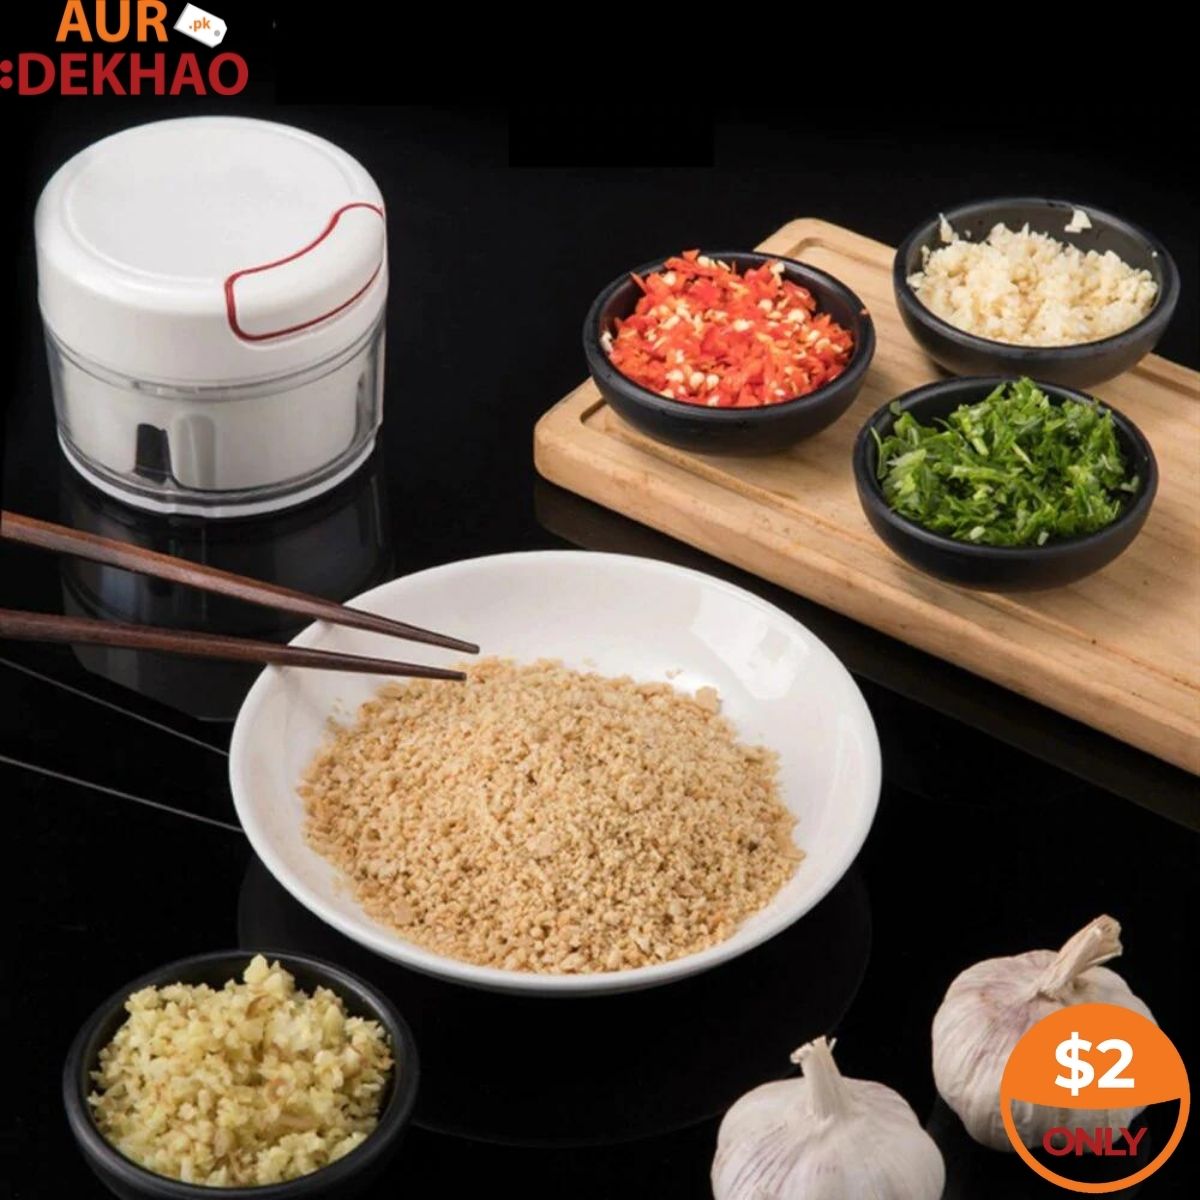 Multi-functional High Quality Mini Food Chopper - 170 ml - Manual Meat Grinder & Mini Vegetable Garlic Cutter - Kitchen Tools